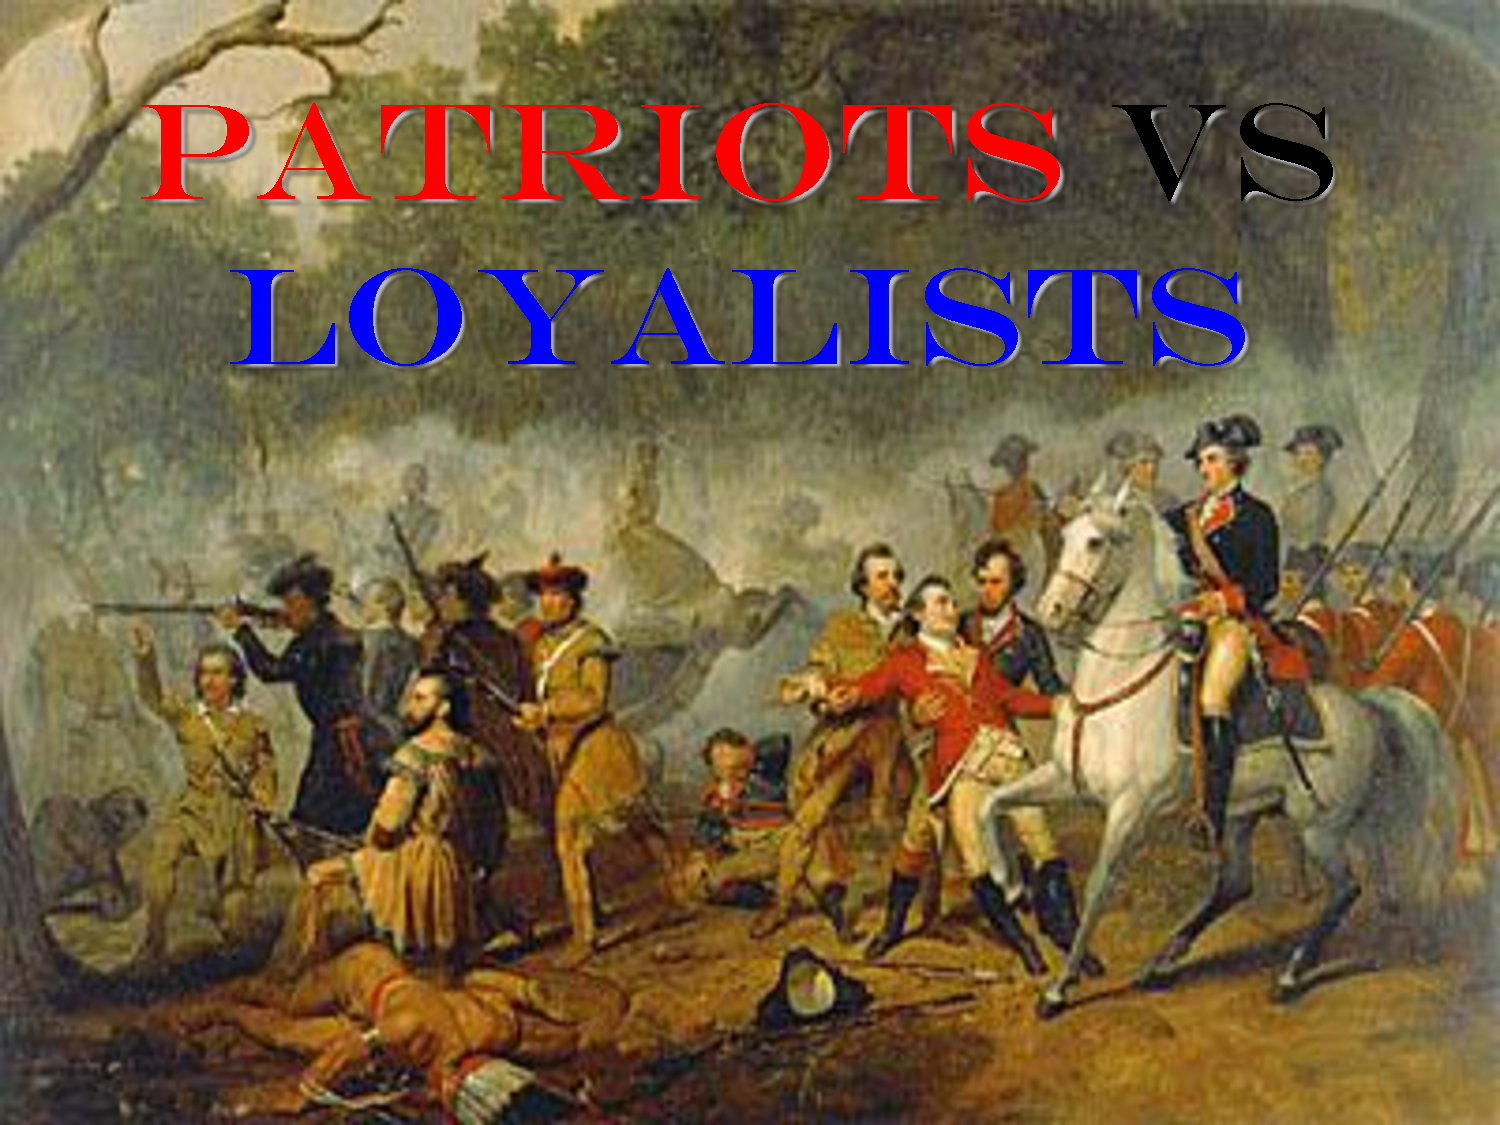 Loyalists vs patriots arguments